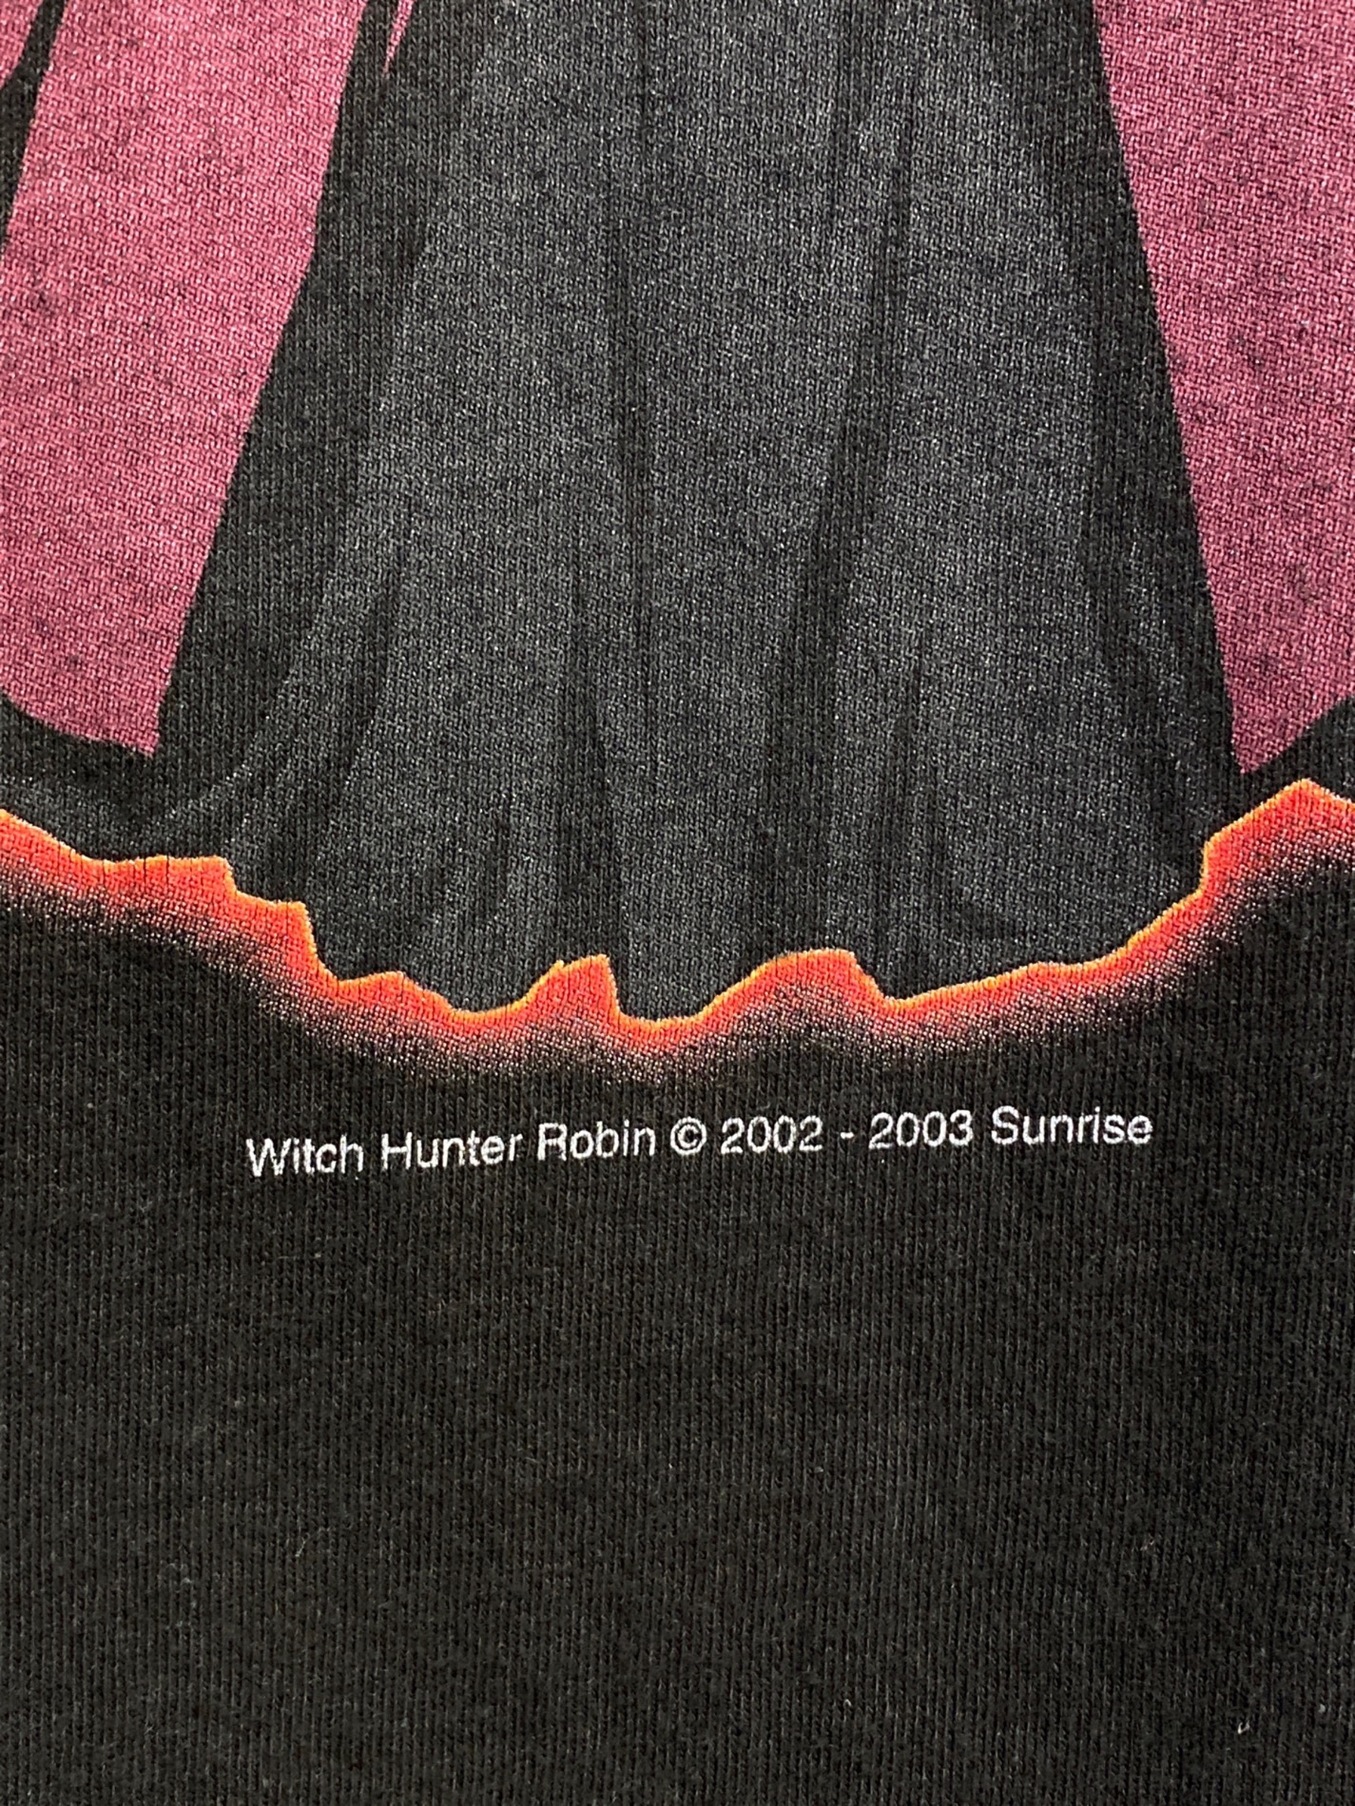 Witch Hunter Robin (ウイッチハンターロビン) ヴィンテージアニメTシャツ ブラック サイズ:XL